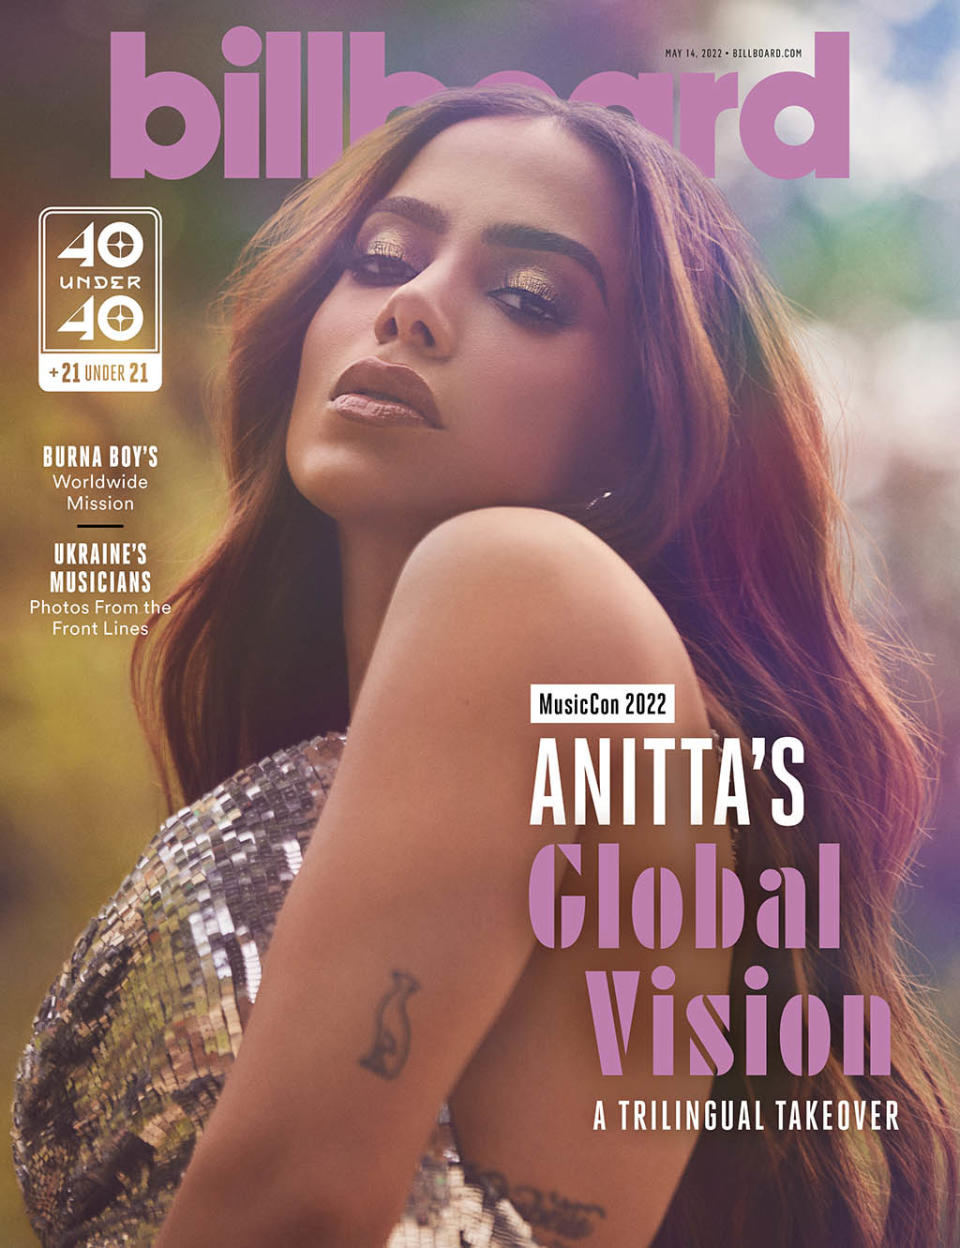 Anitta covers the latest issue of Billboard. - Credit: Billboard